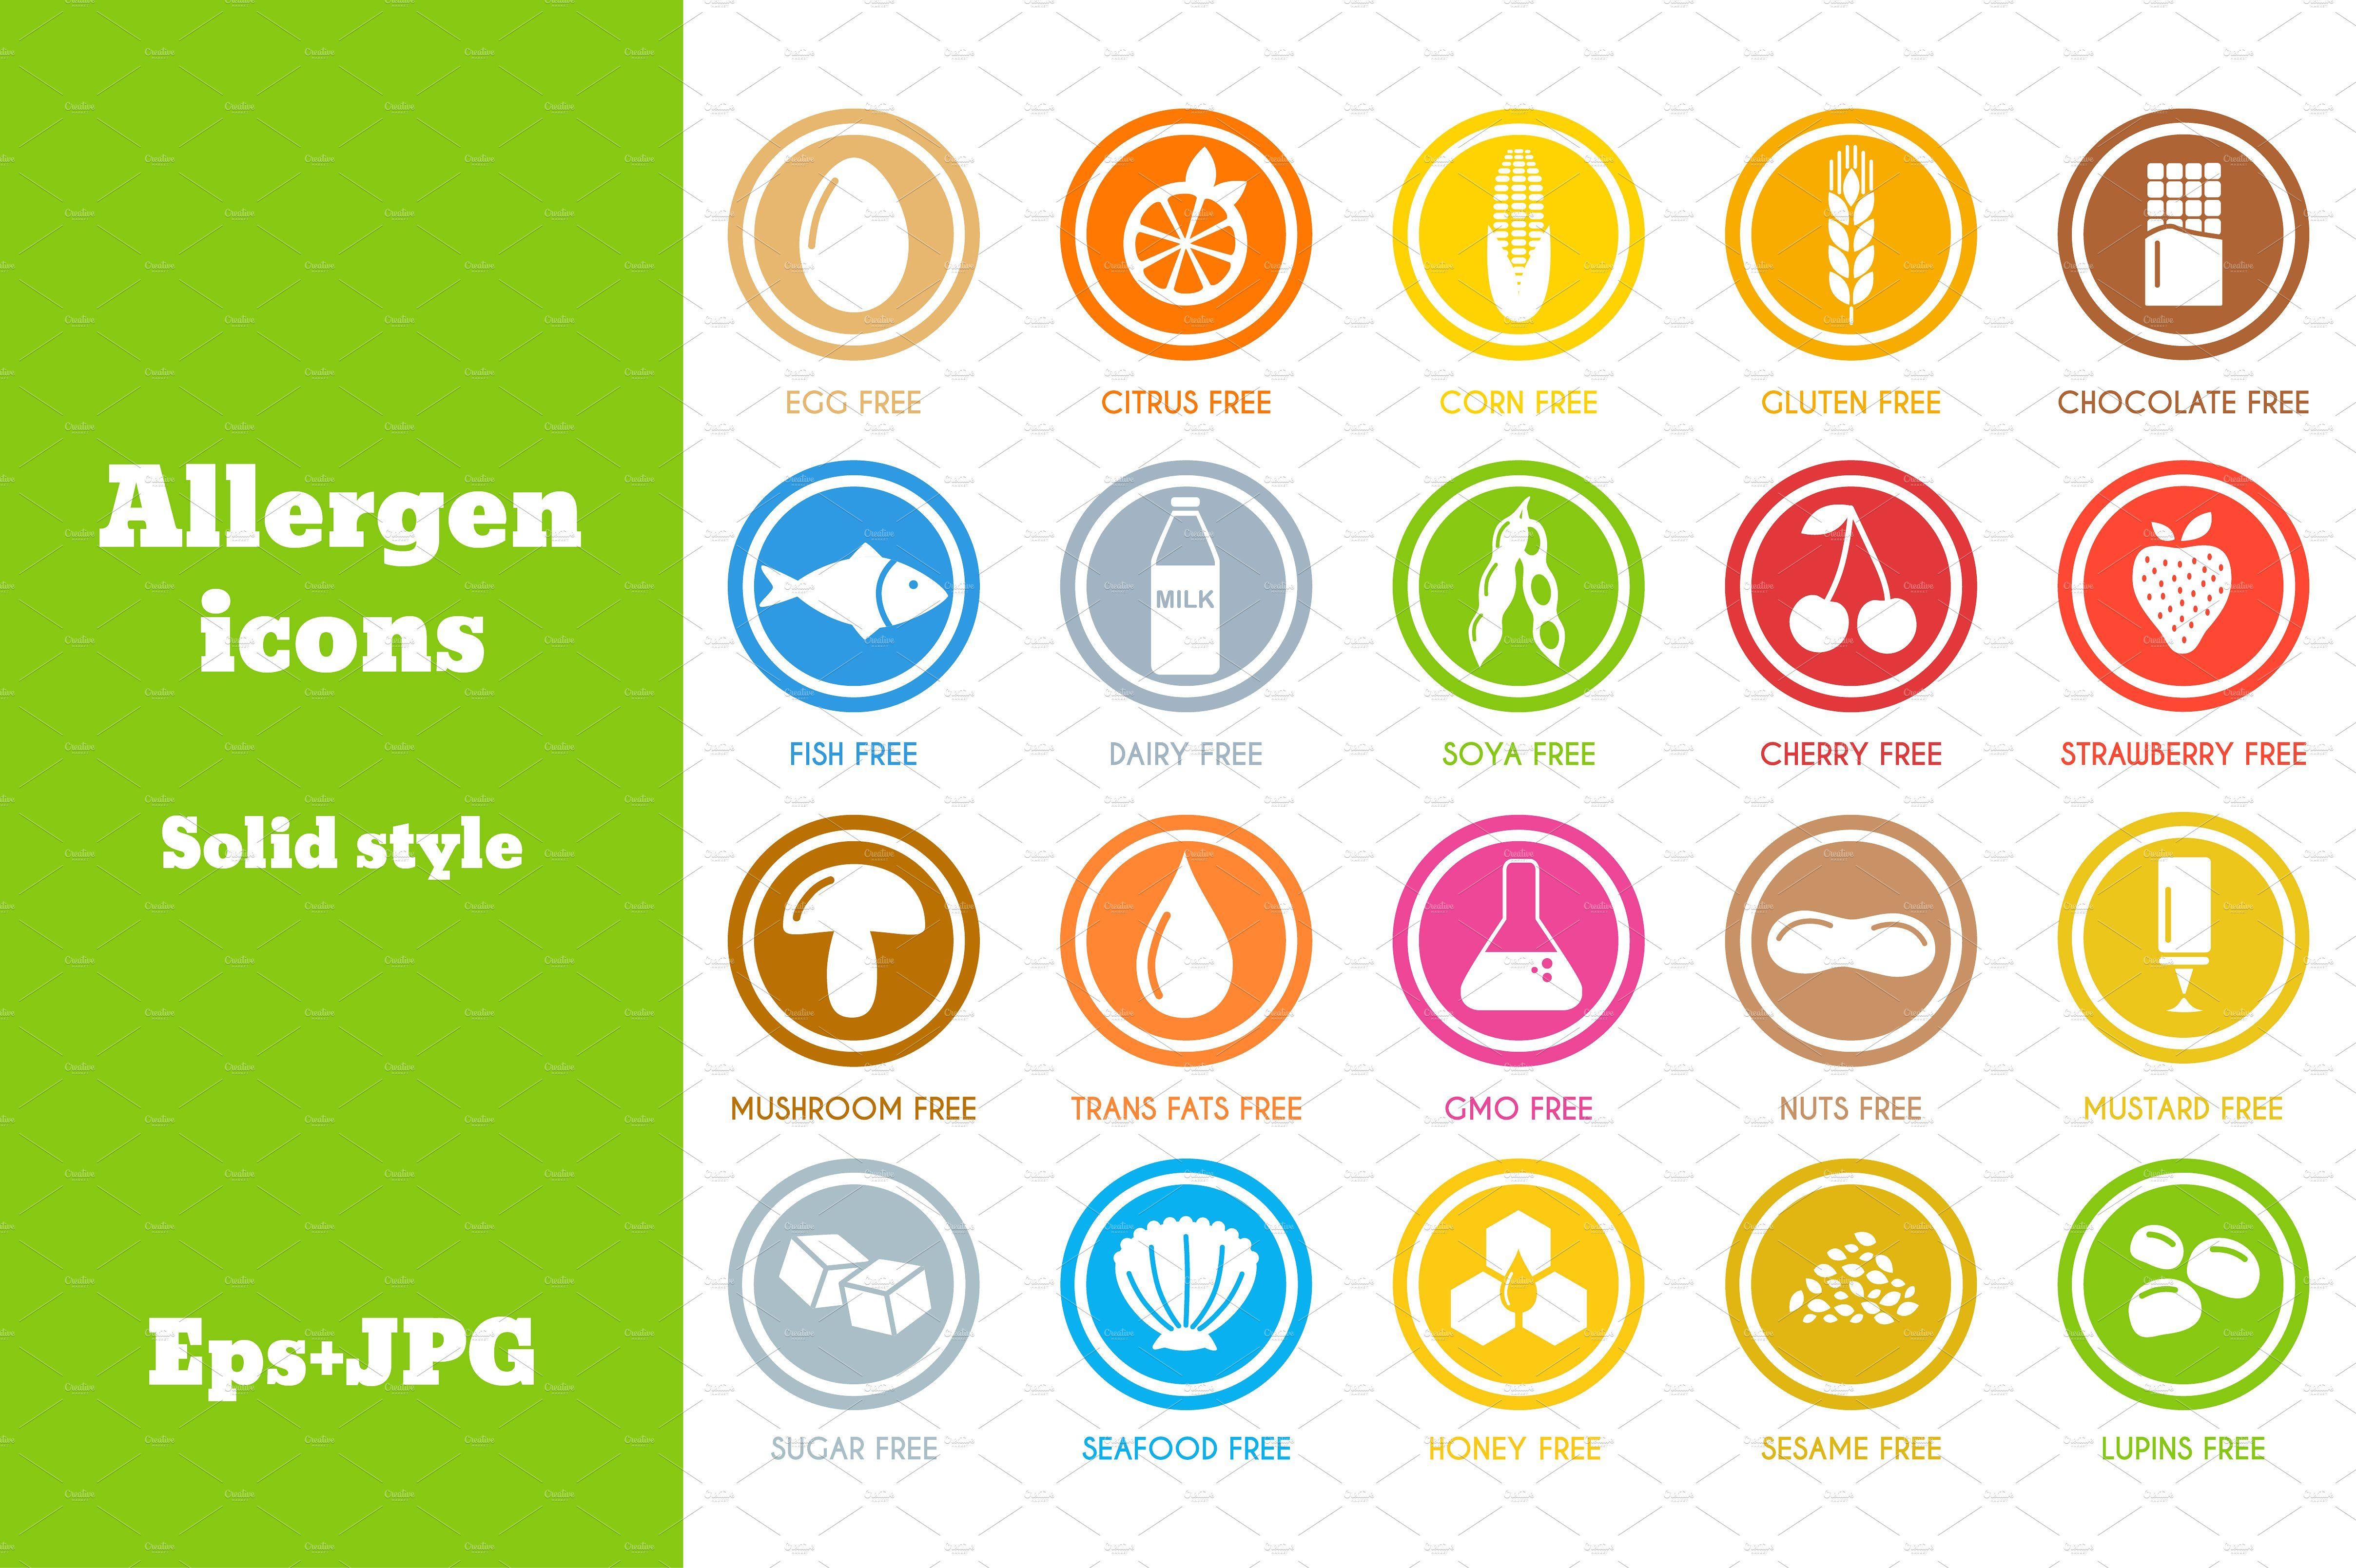 Allergen Logo - Allergen icons #sugar#seafood#mustarb#fat | Symbol Logos Design ...